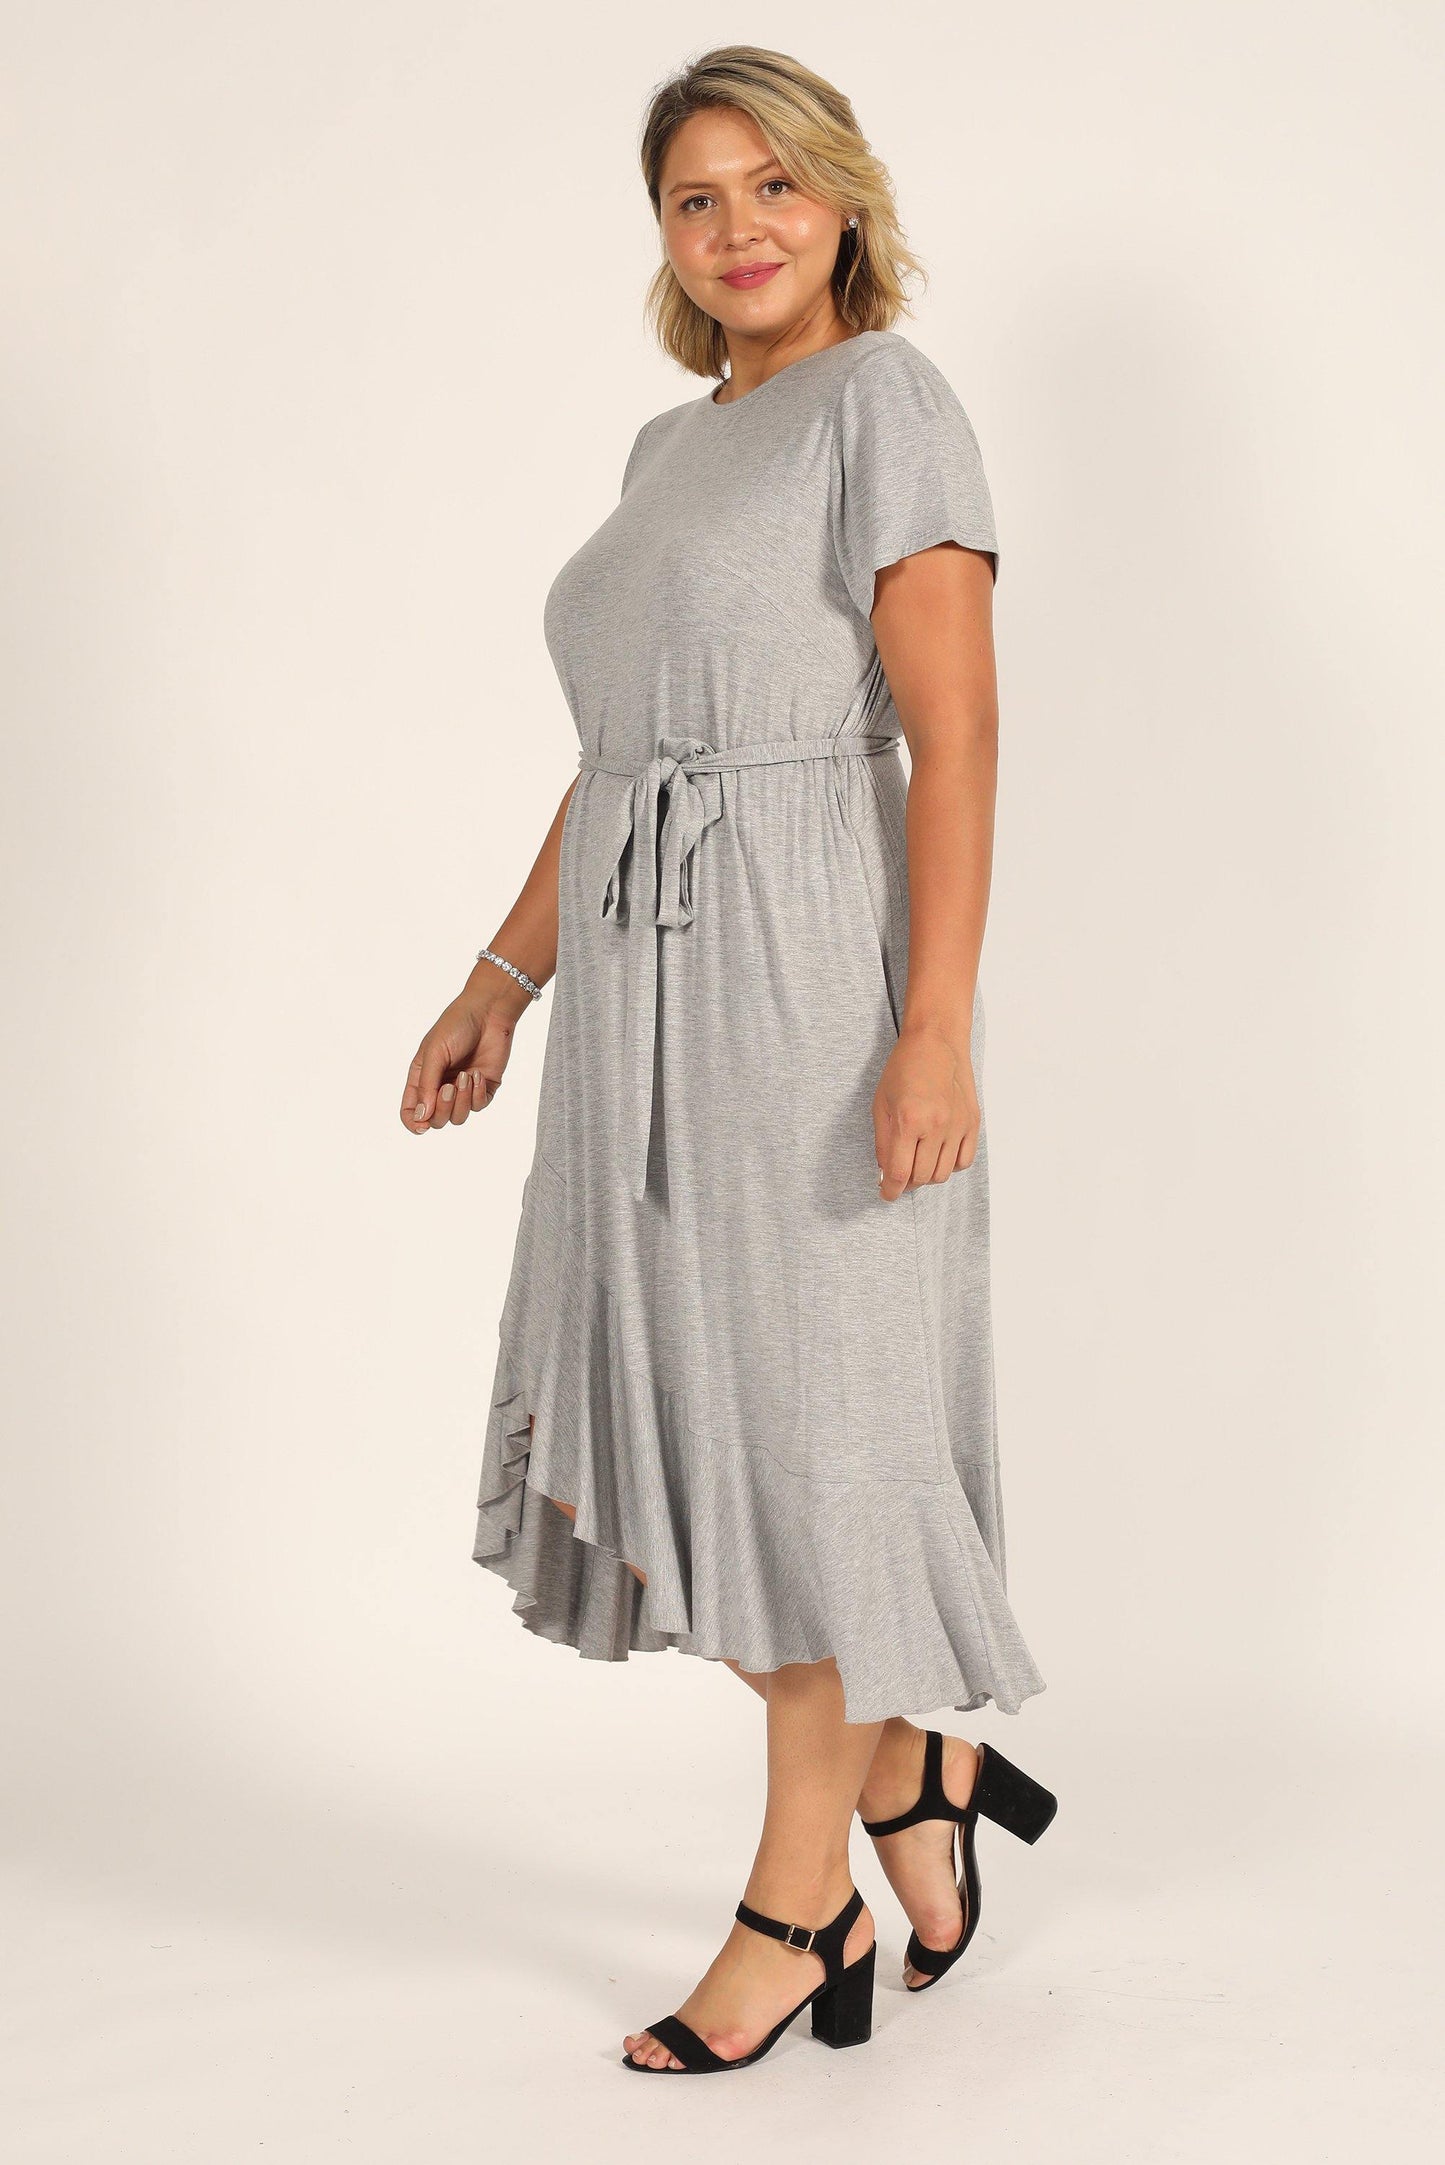 London Times Short Plus Size High Low Dress T5769W - The Dress Outlet